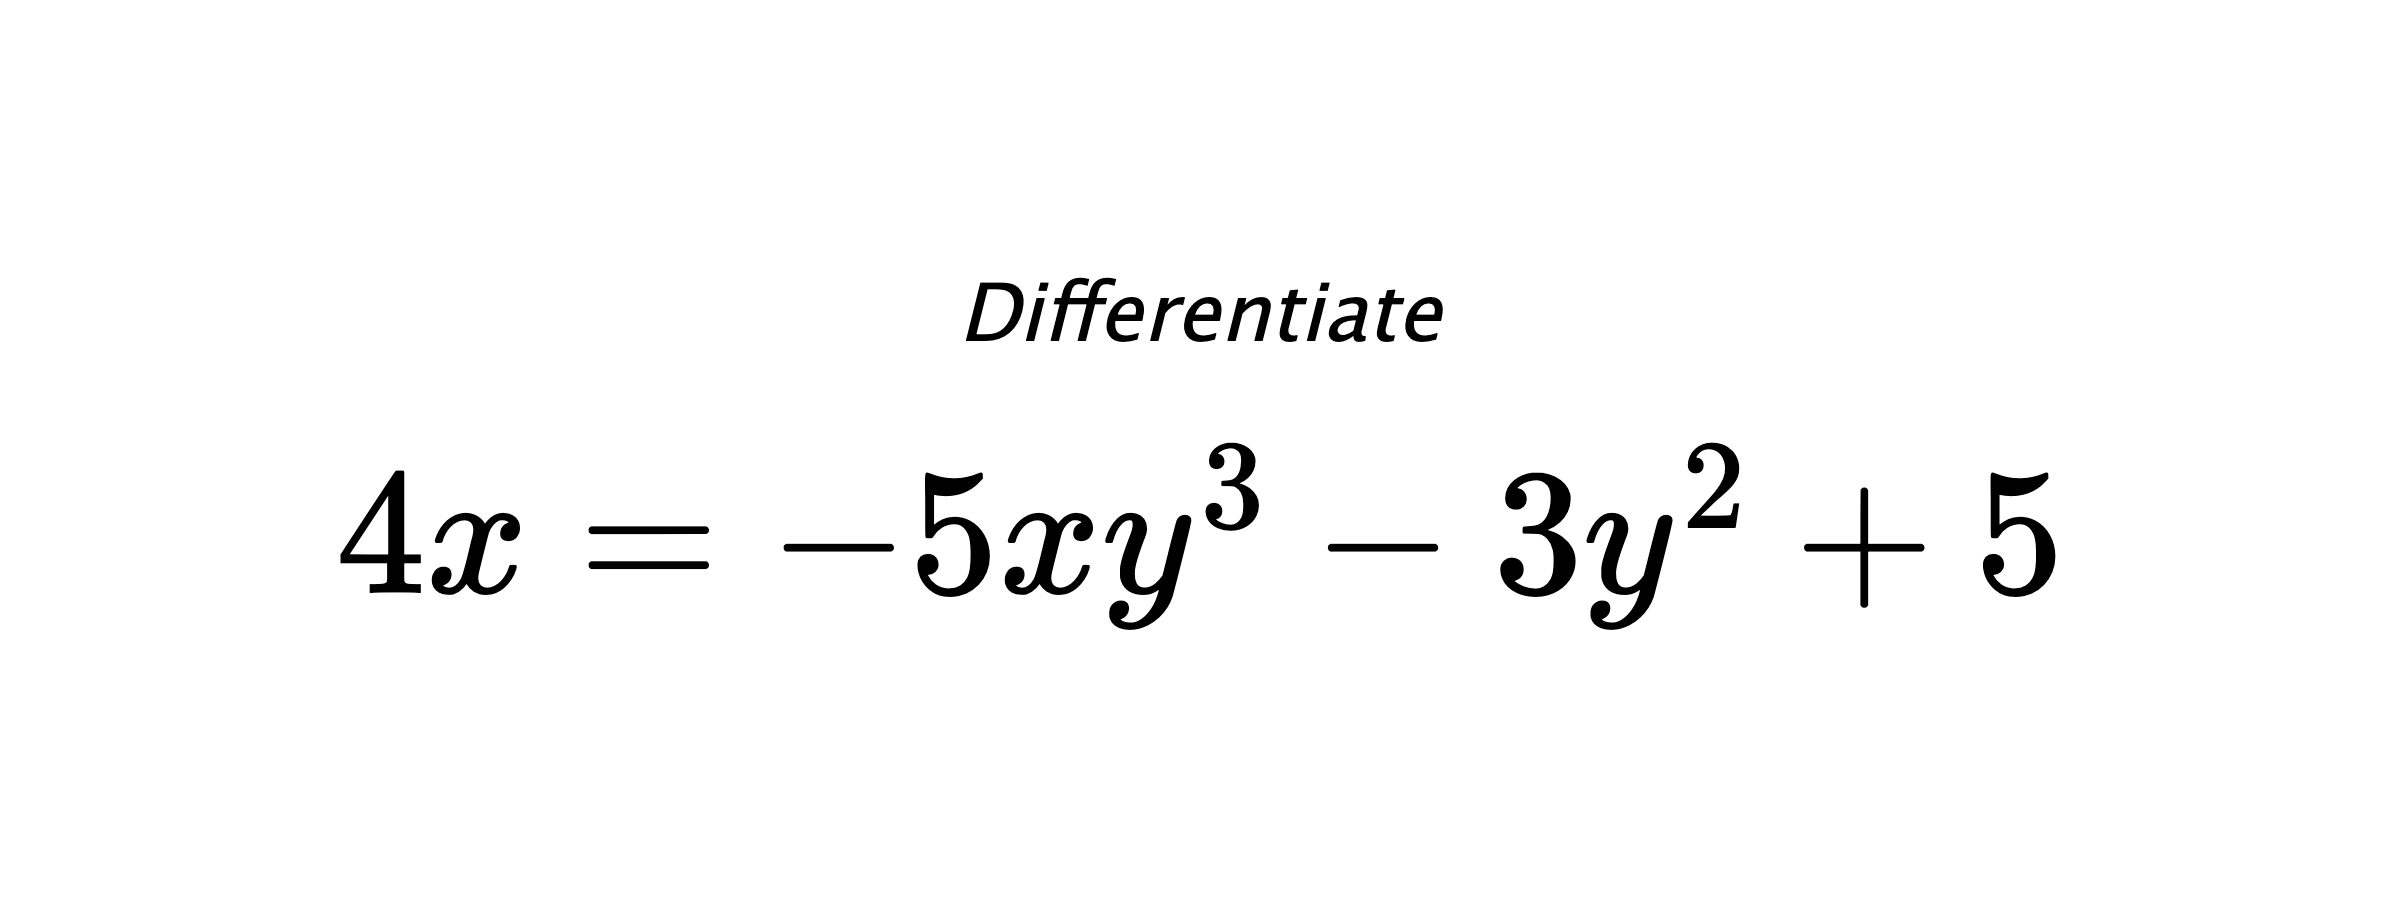 Differentiate $ 4x = -5xy^3-3y^2+5 $